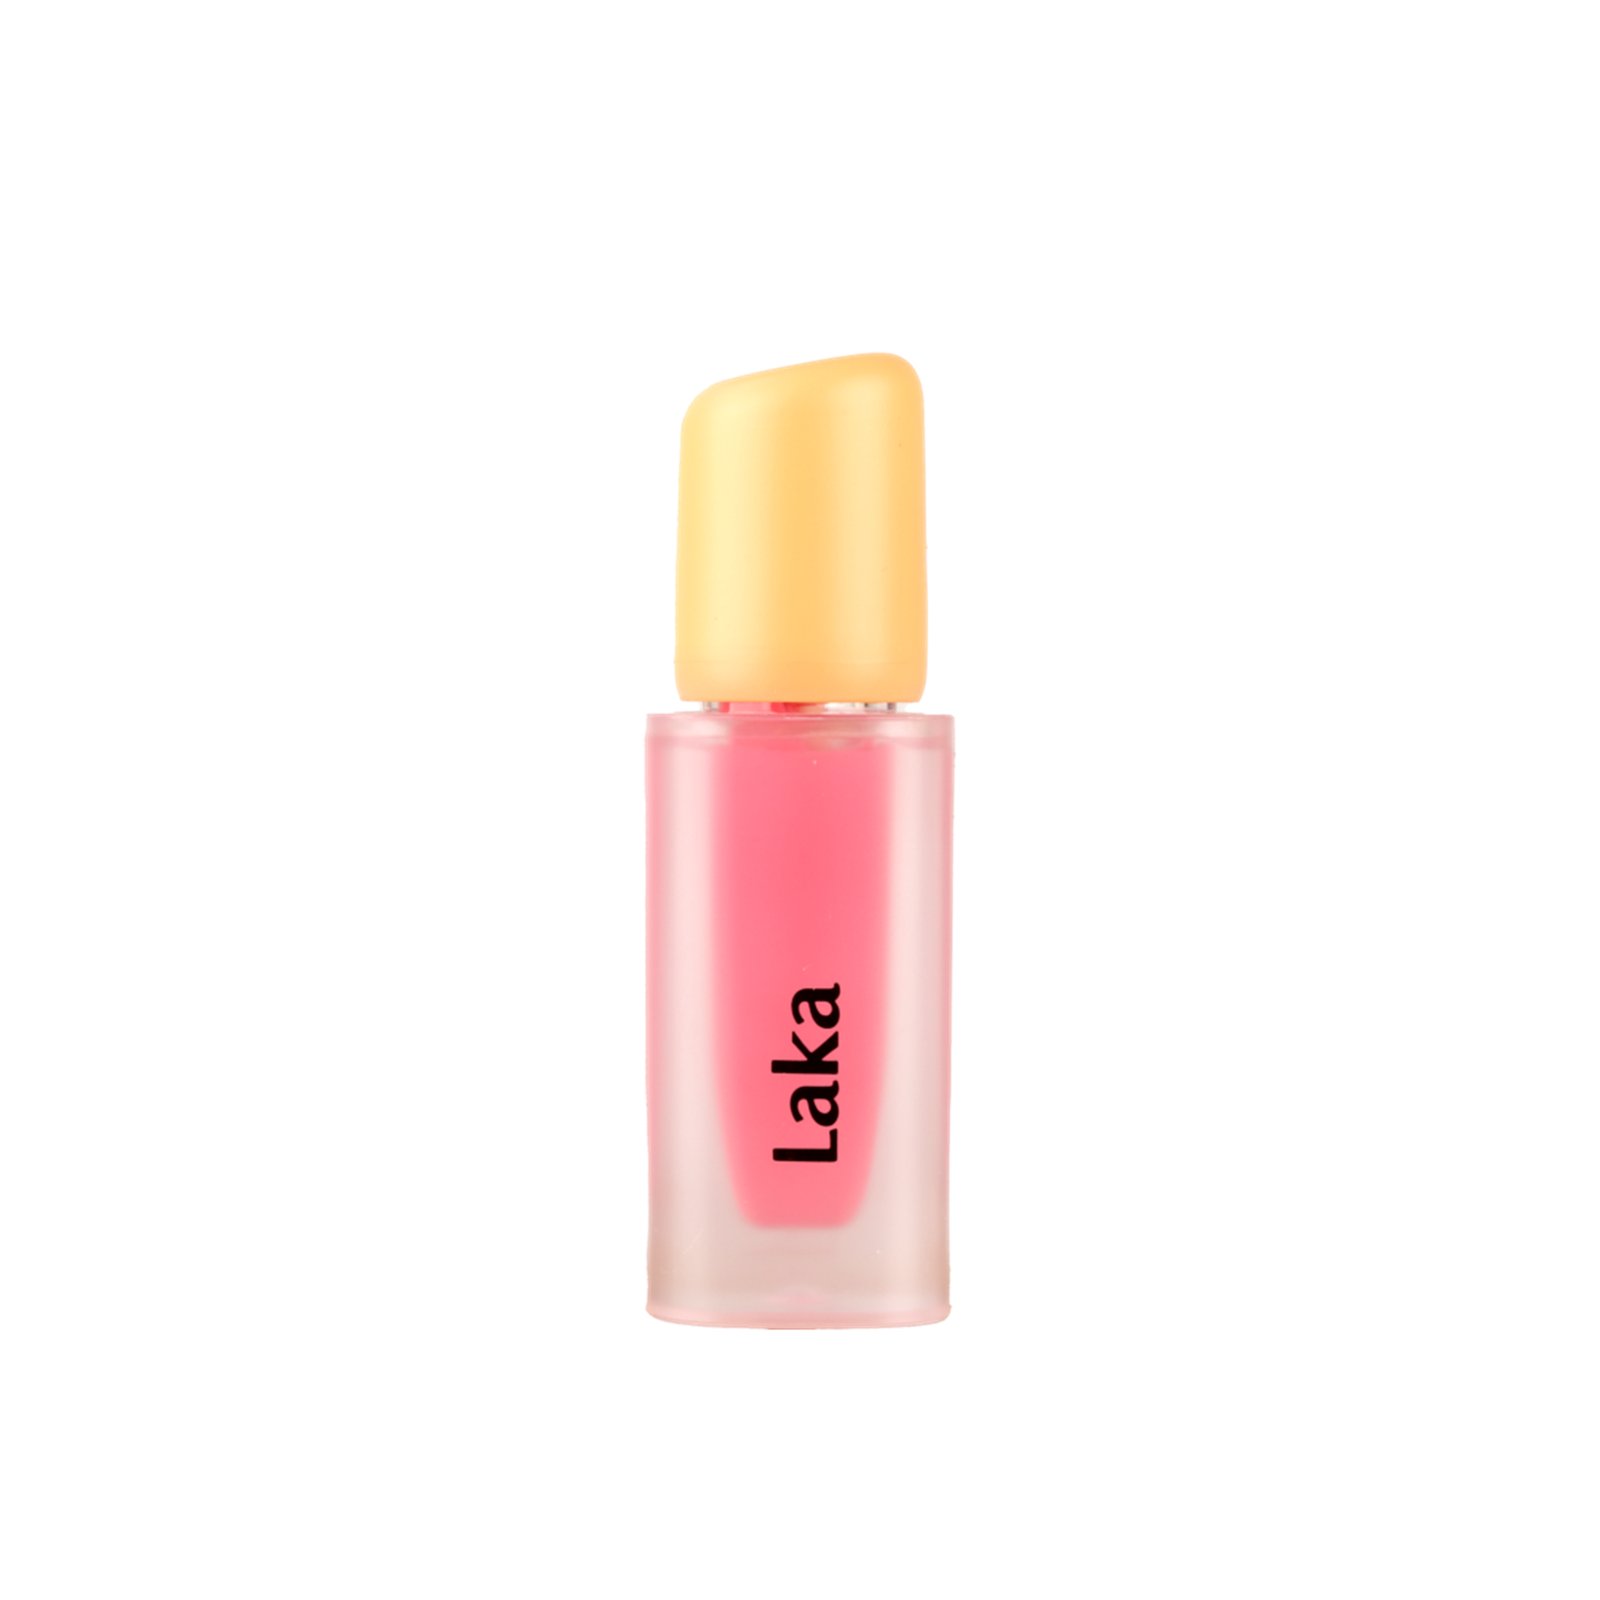 Laka Fruity Glam Lip Tint 112 Ping-Pong 4.5g (0.15 oz)